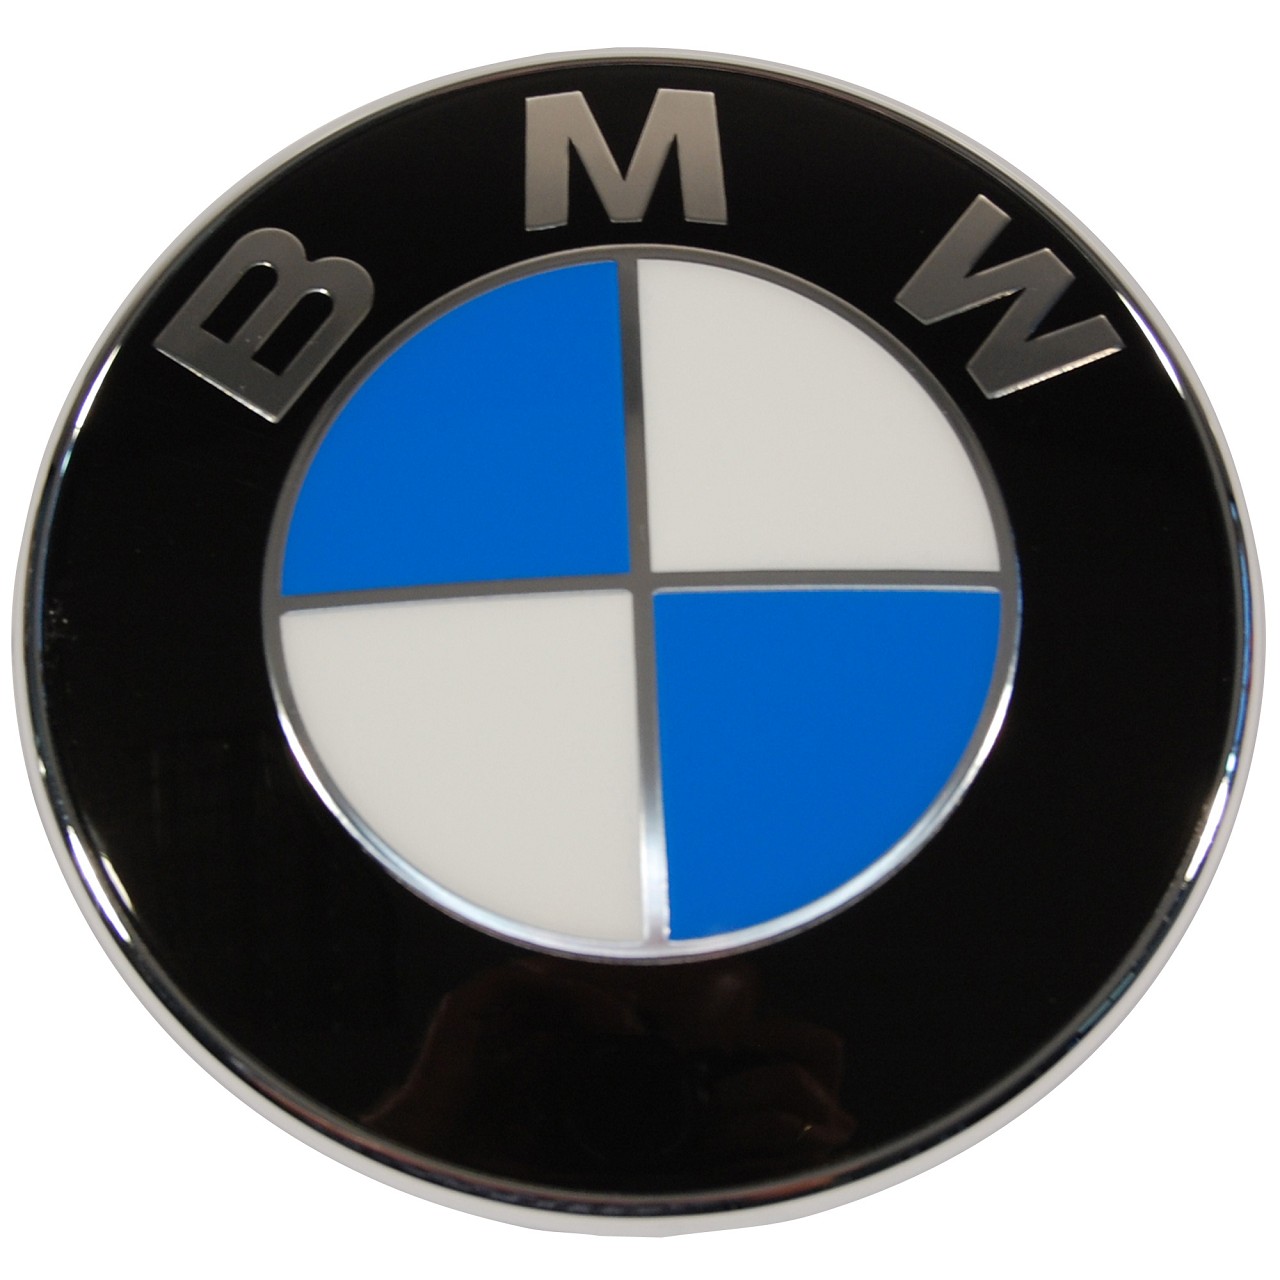 Original BMW Embleme - 51 14 8 132 375, 51 14 1 807 495